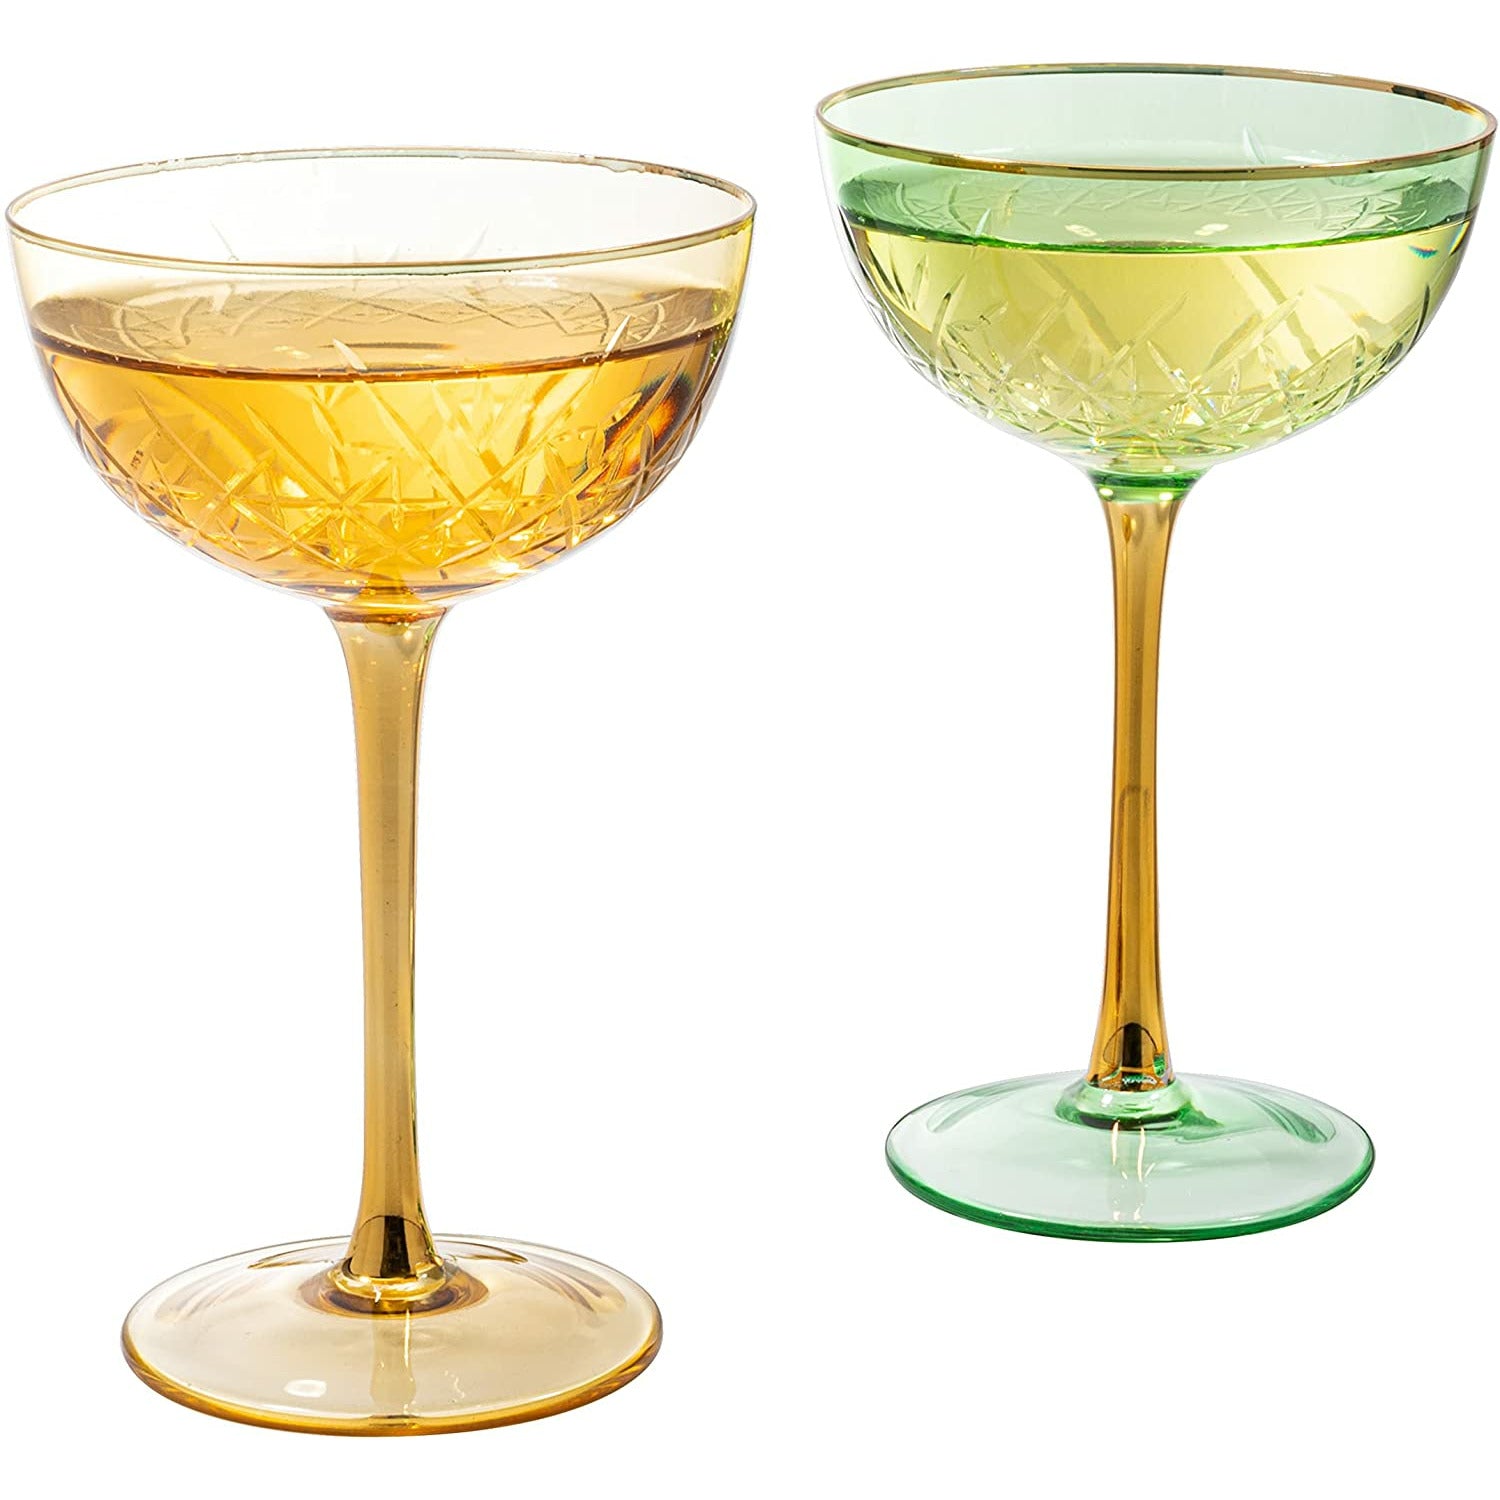 Glassique Cadeau Vintage Art Deco Coupe Glasses Set of 4 7 oz Classic Cocktail Glassware for Champagne, Martini, Manhattan, Cosmopolitan, Sidecar